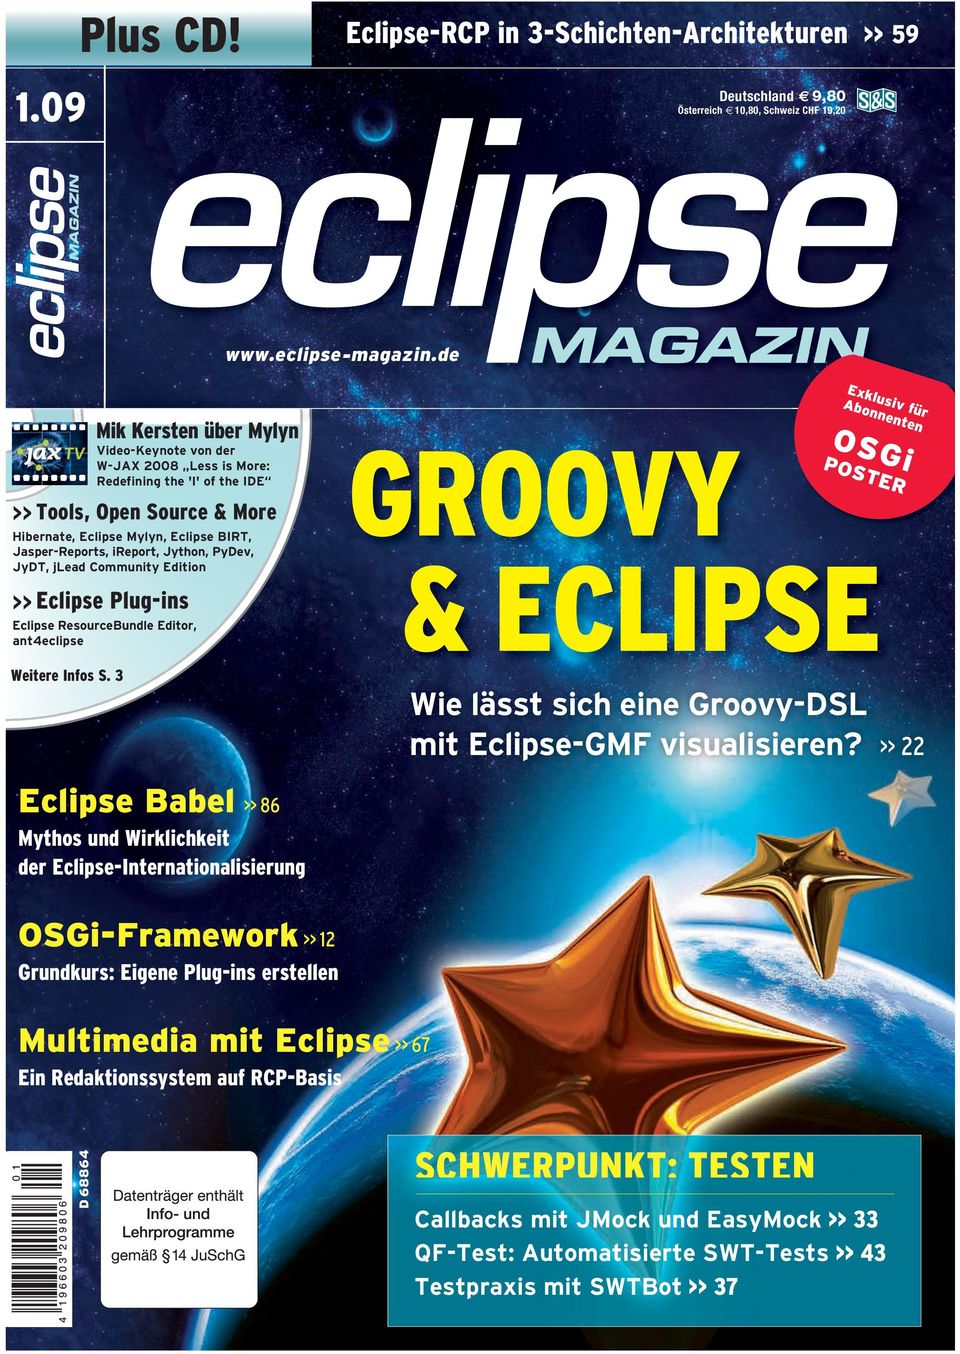 >> Tools, Open Source & More Hibernate, Eclipse Mylyn, Eclipse BIRT, Jasper-Reports, ireport, Jython, PyDev, JyDT, jlead Community Edition >> Eclipse Plug-ins Eclipse ResourceBundle Editor,